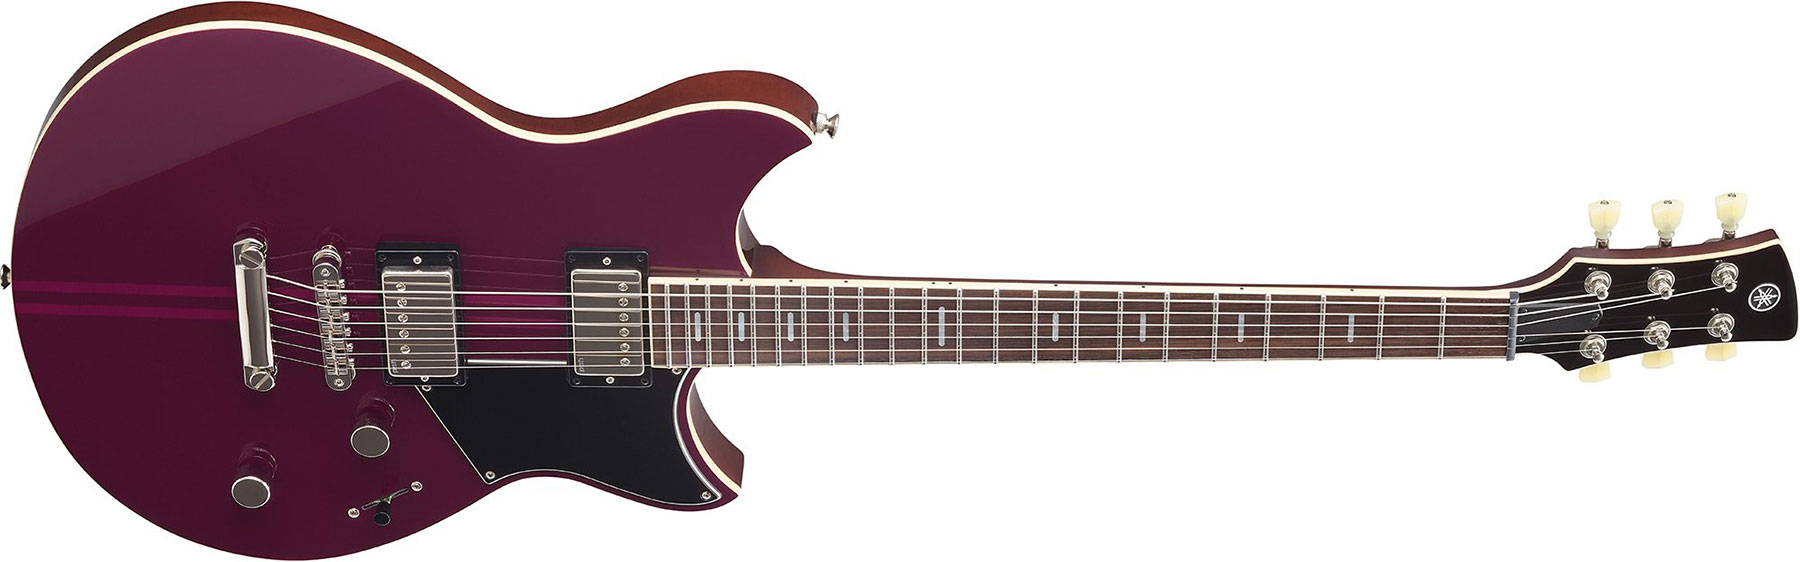 Yamaha Rss20 Revstar Standard Hh Ht Rw - Hot Merlot - Guitarra eléctrica de doble corte - Variation 1